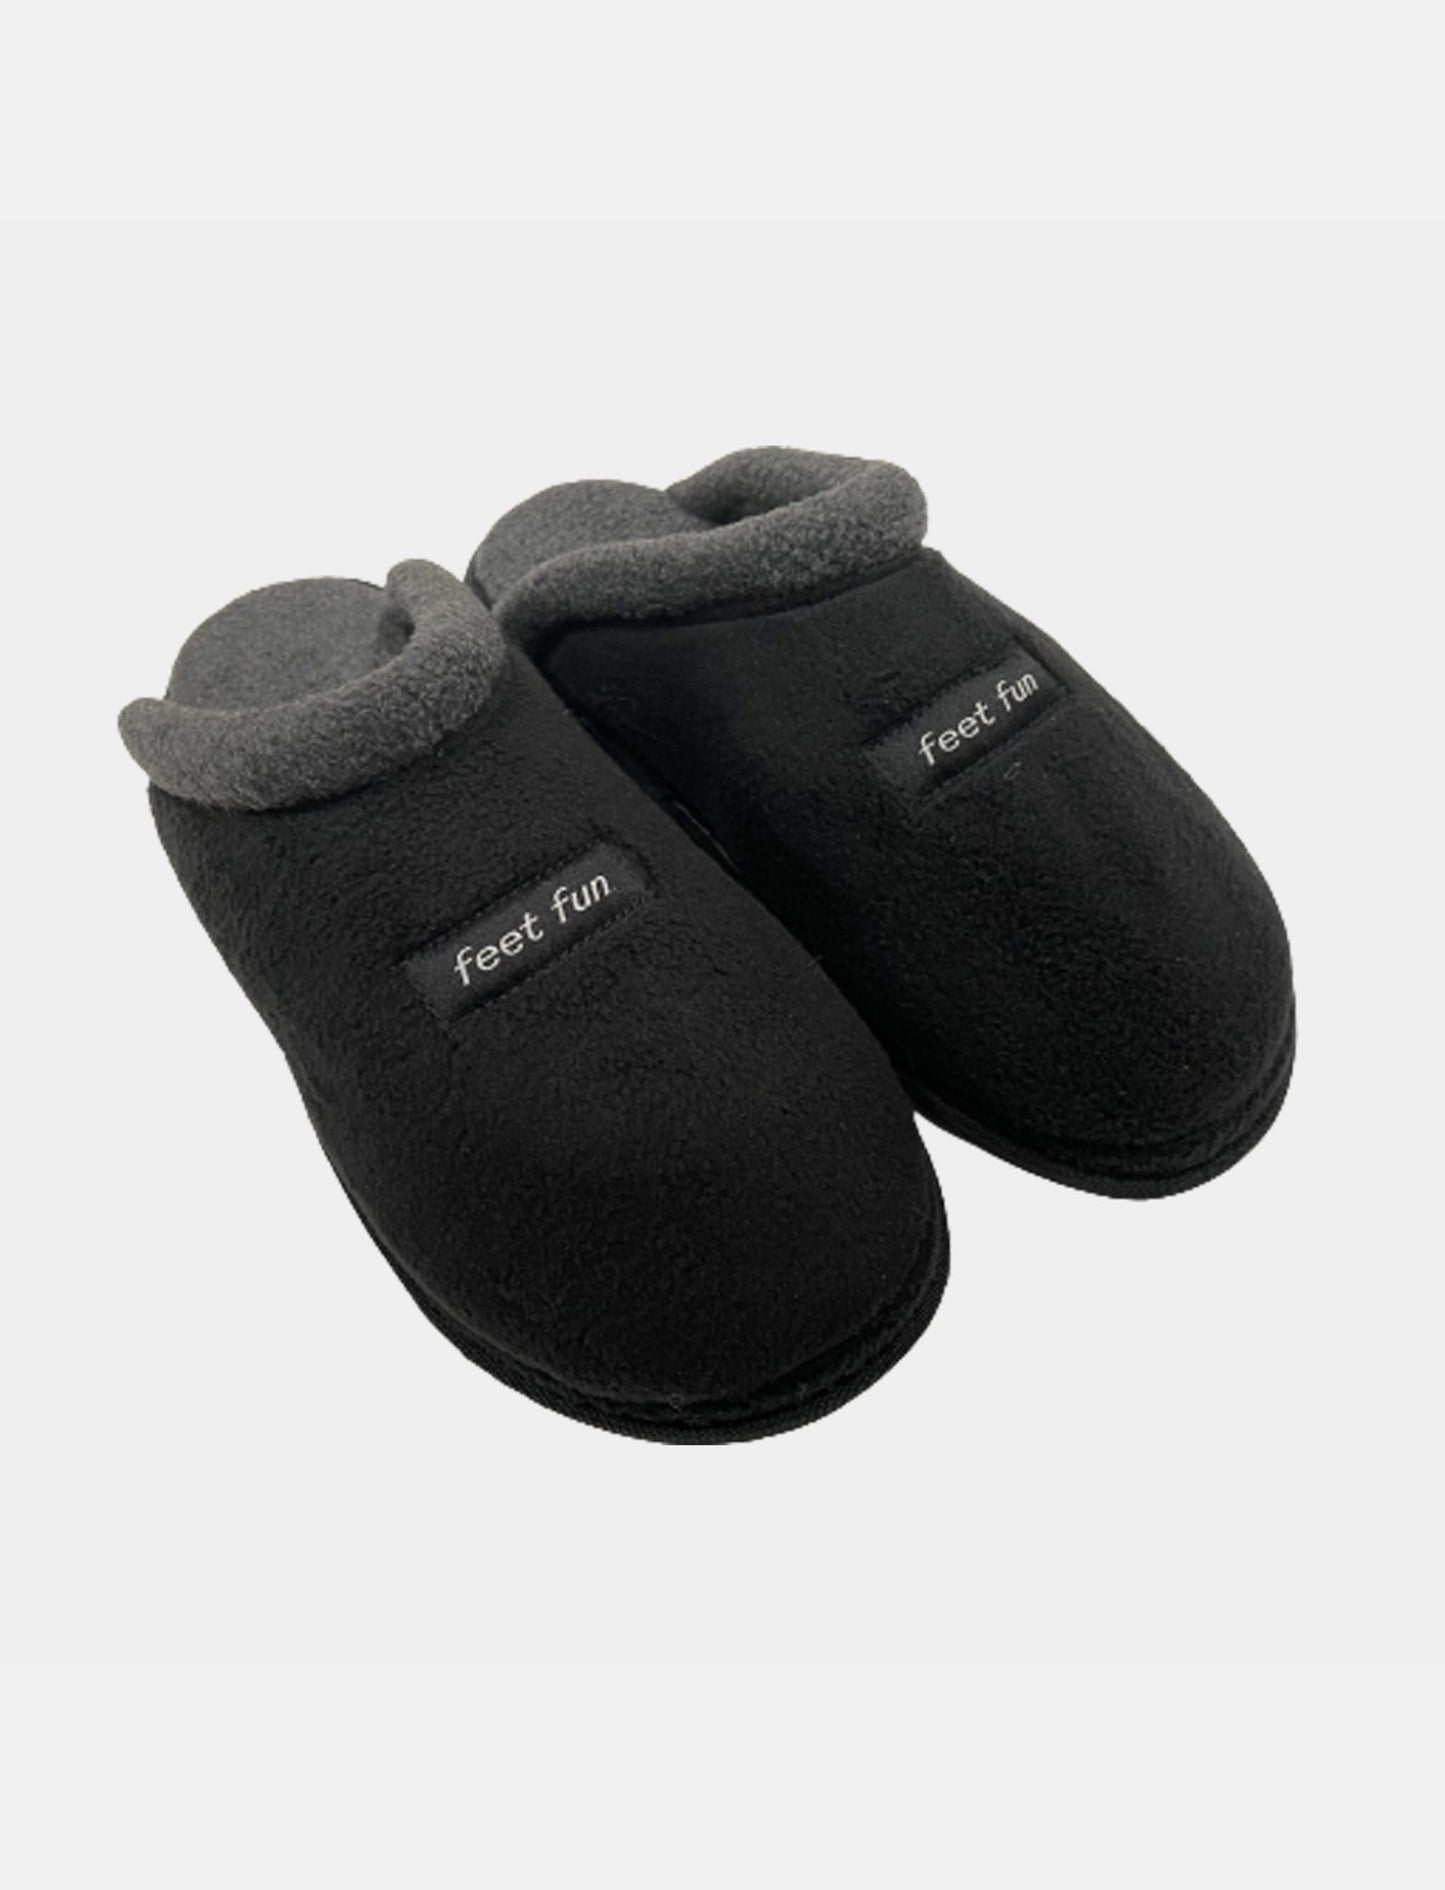 Feet Fun - נעלי בית לגברים פיט פאן ברק פליז